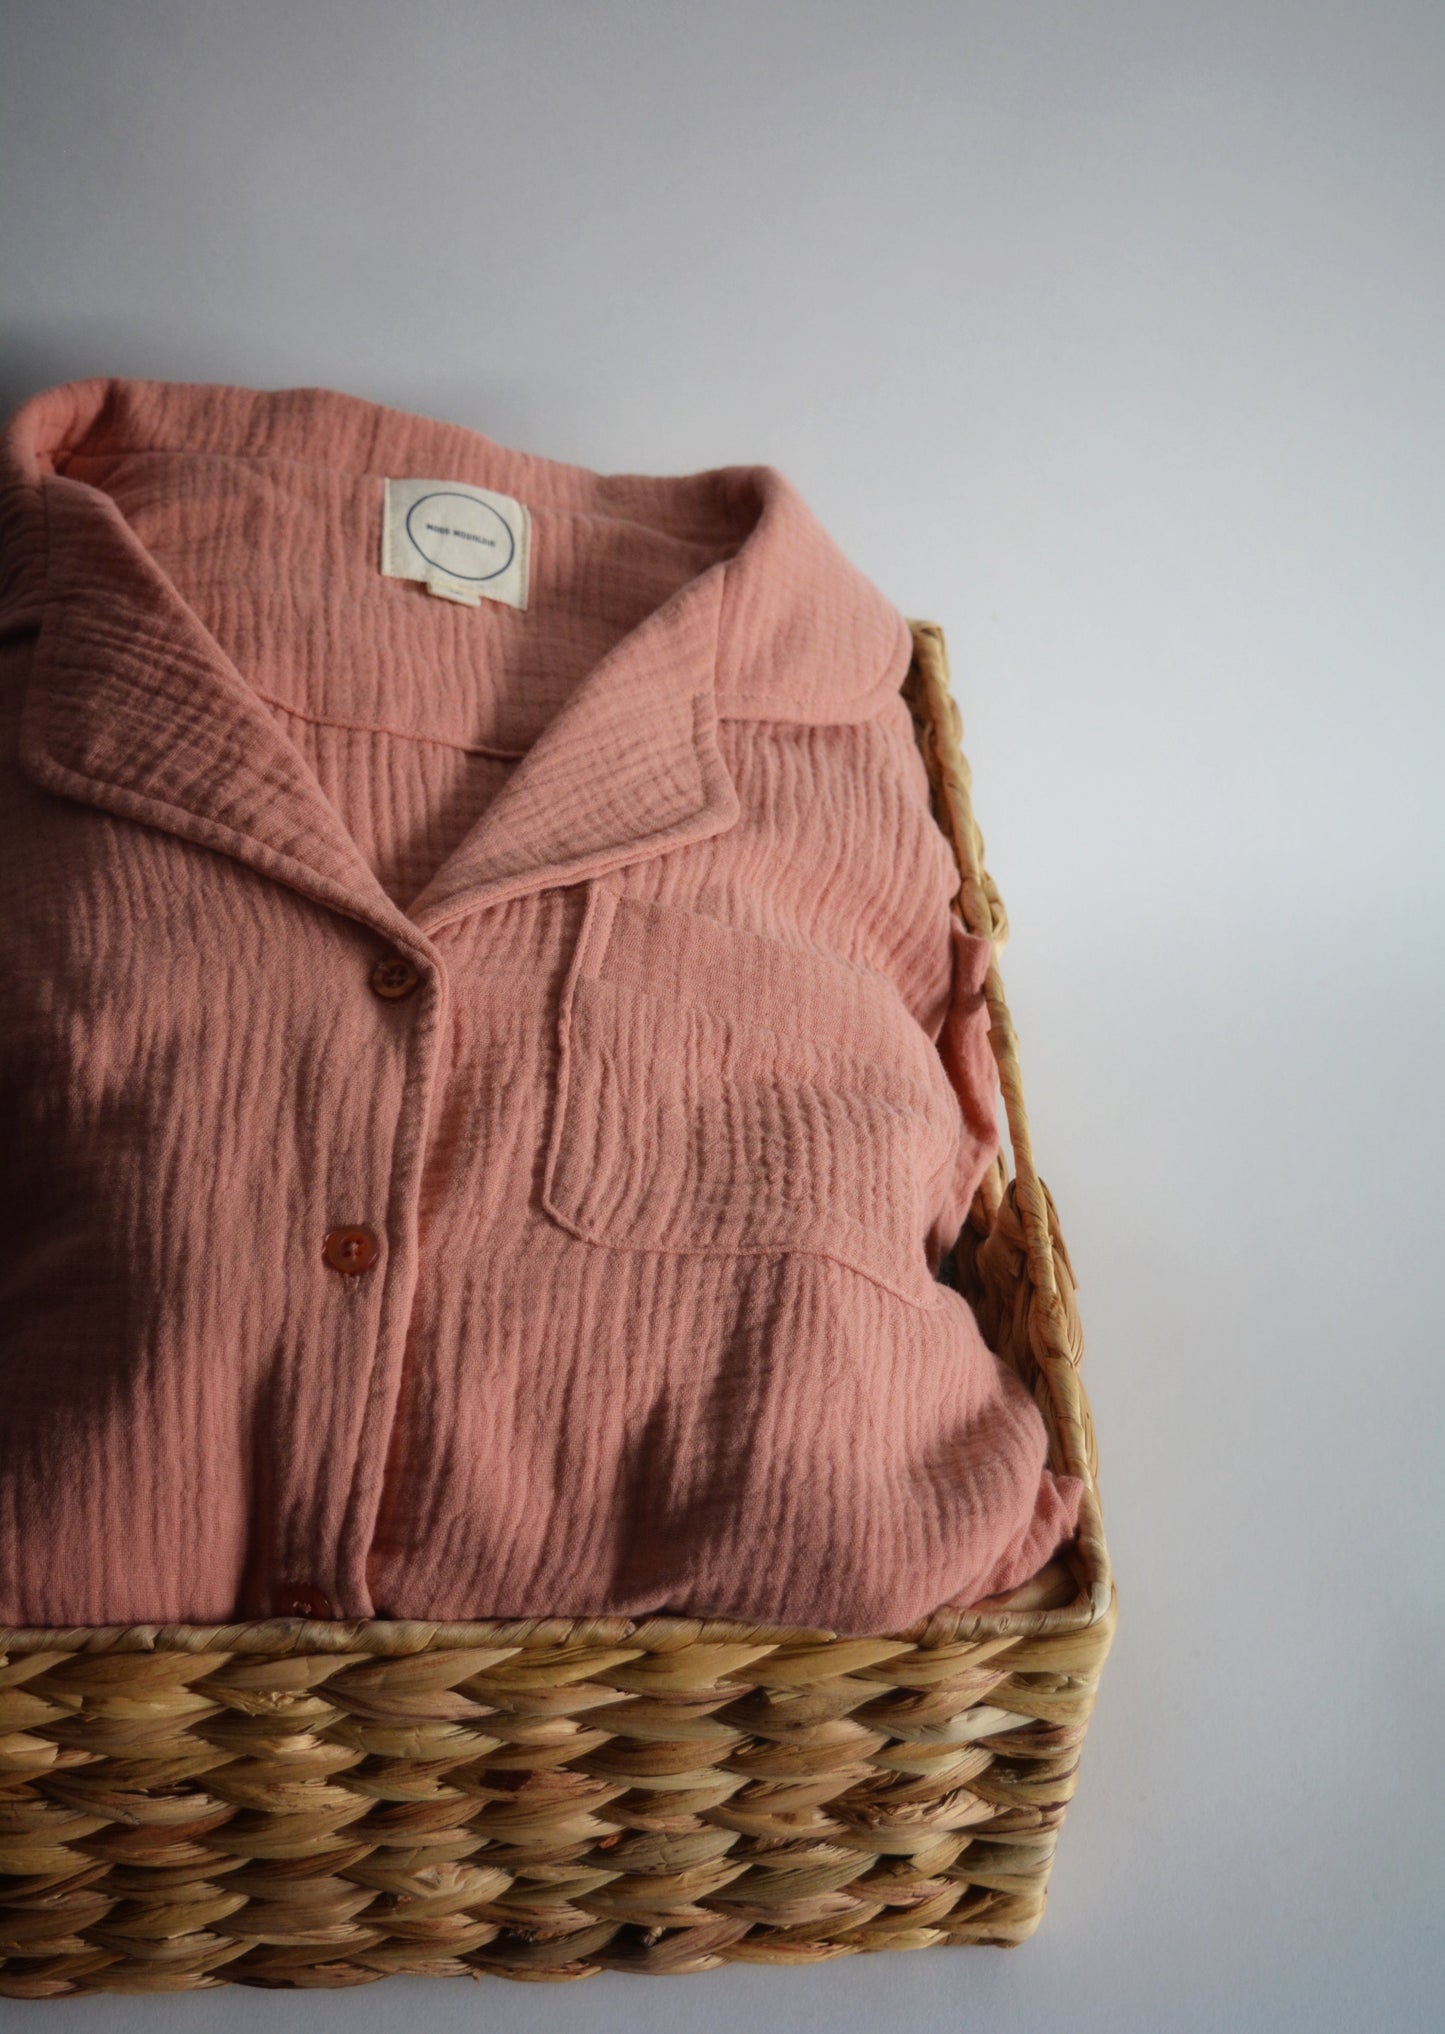 Cotton Muslin double gauze Sleepwear Set pajama set in pink color